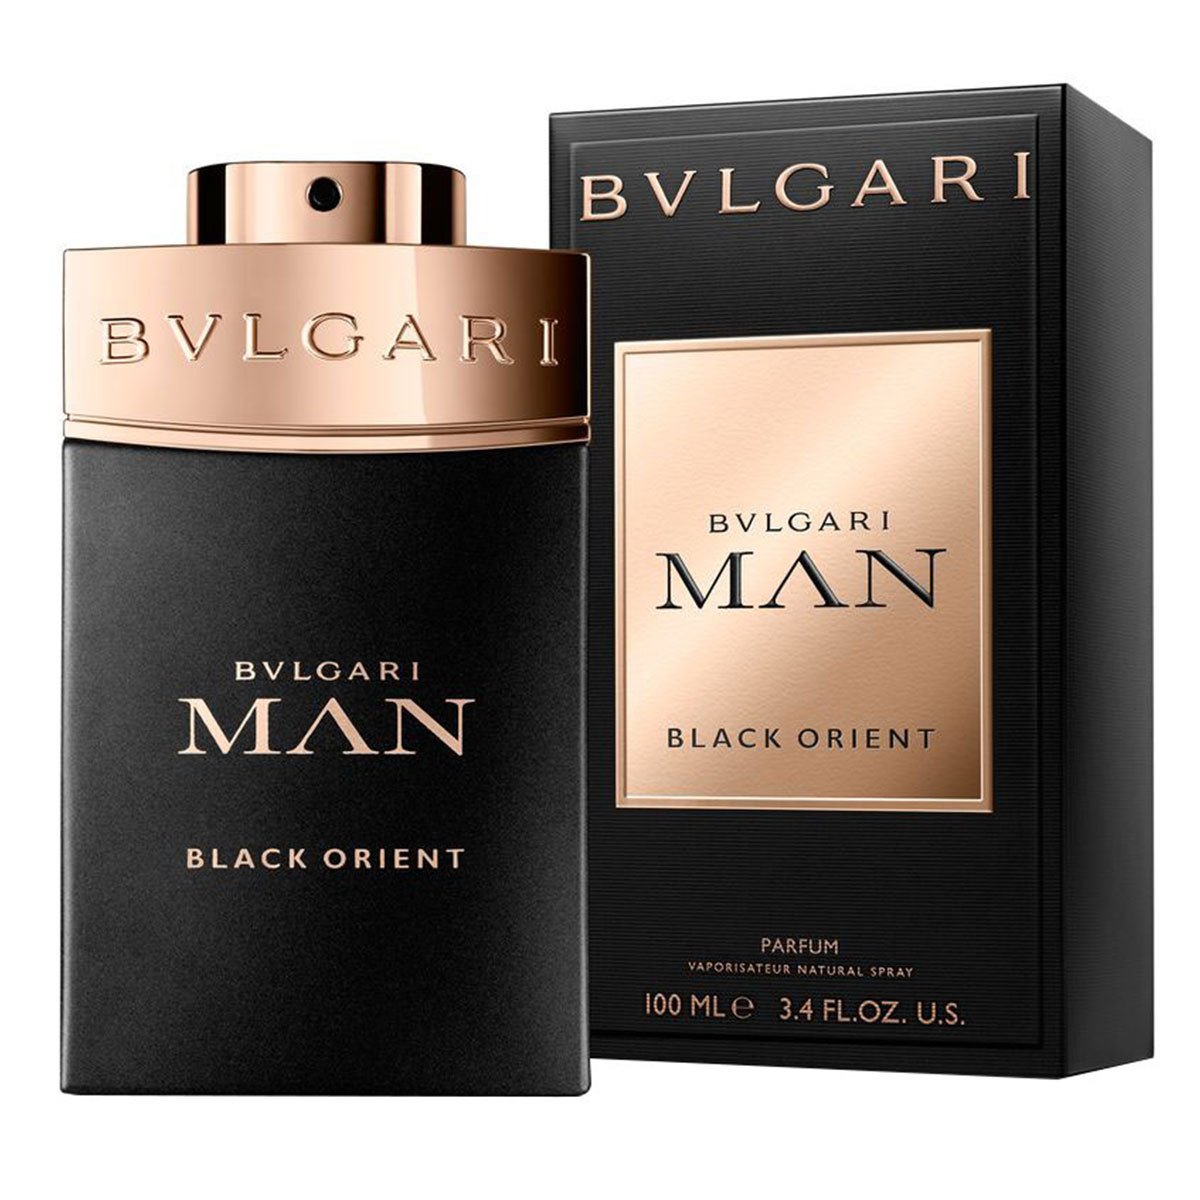 Bvlgari - Man Black Orient | Reviews 